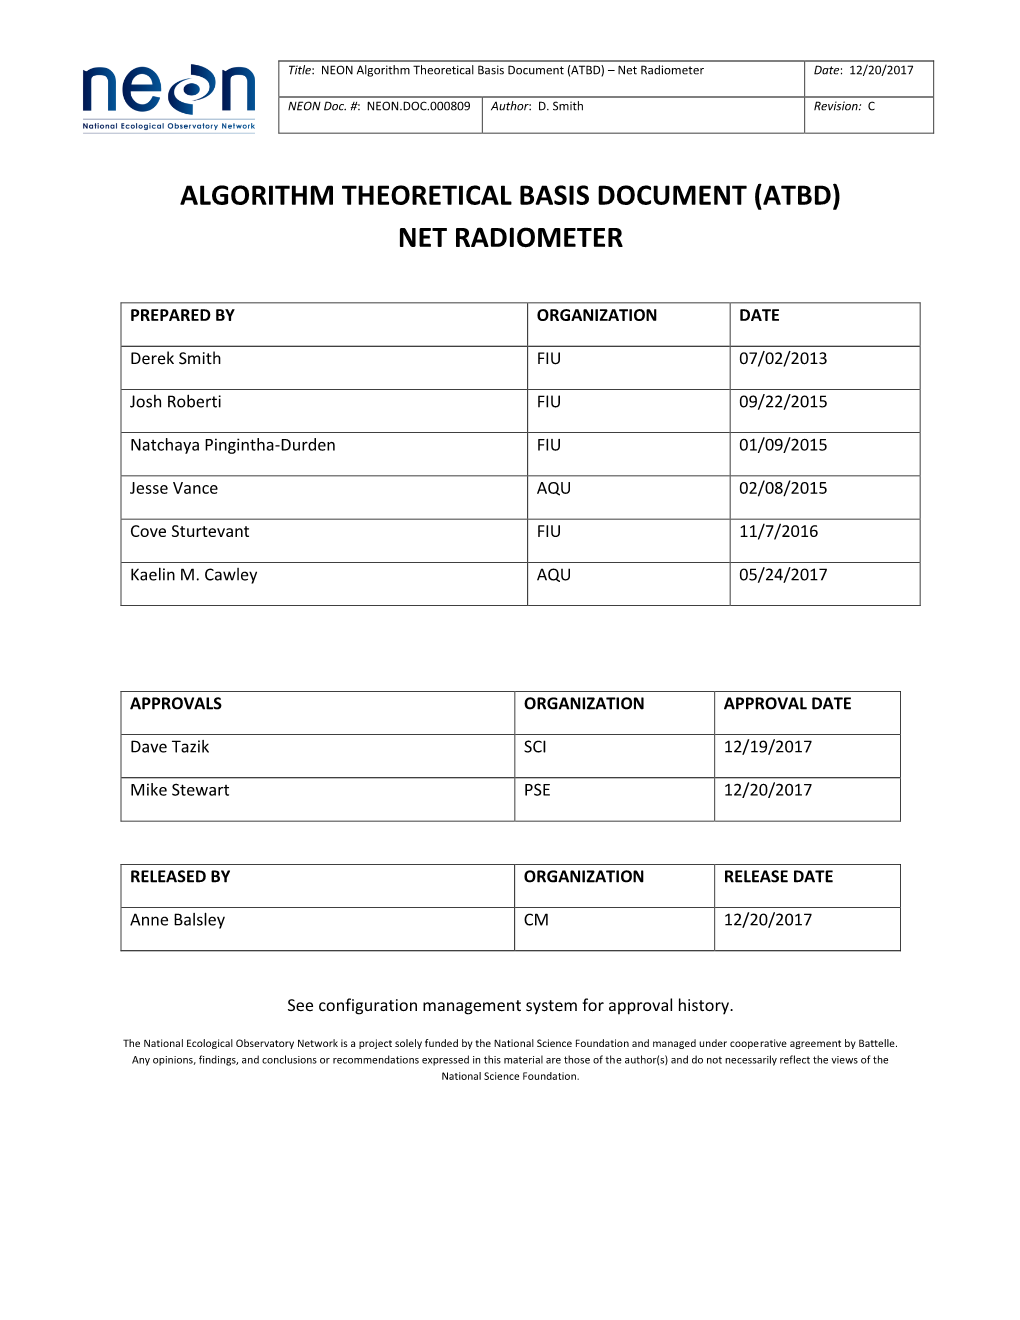 NEON Algorithm Theoretical Basis Document (ATBD) – Net Radiometer NEON.DOC.000809Vc